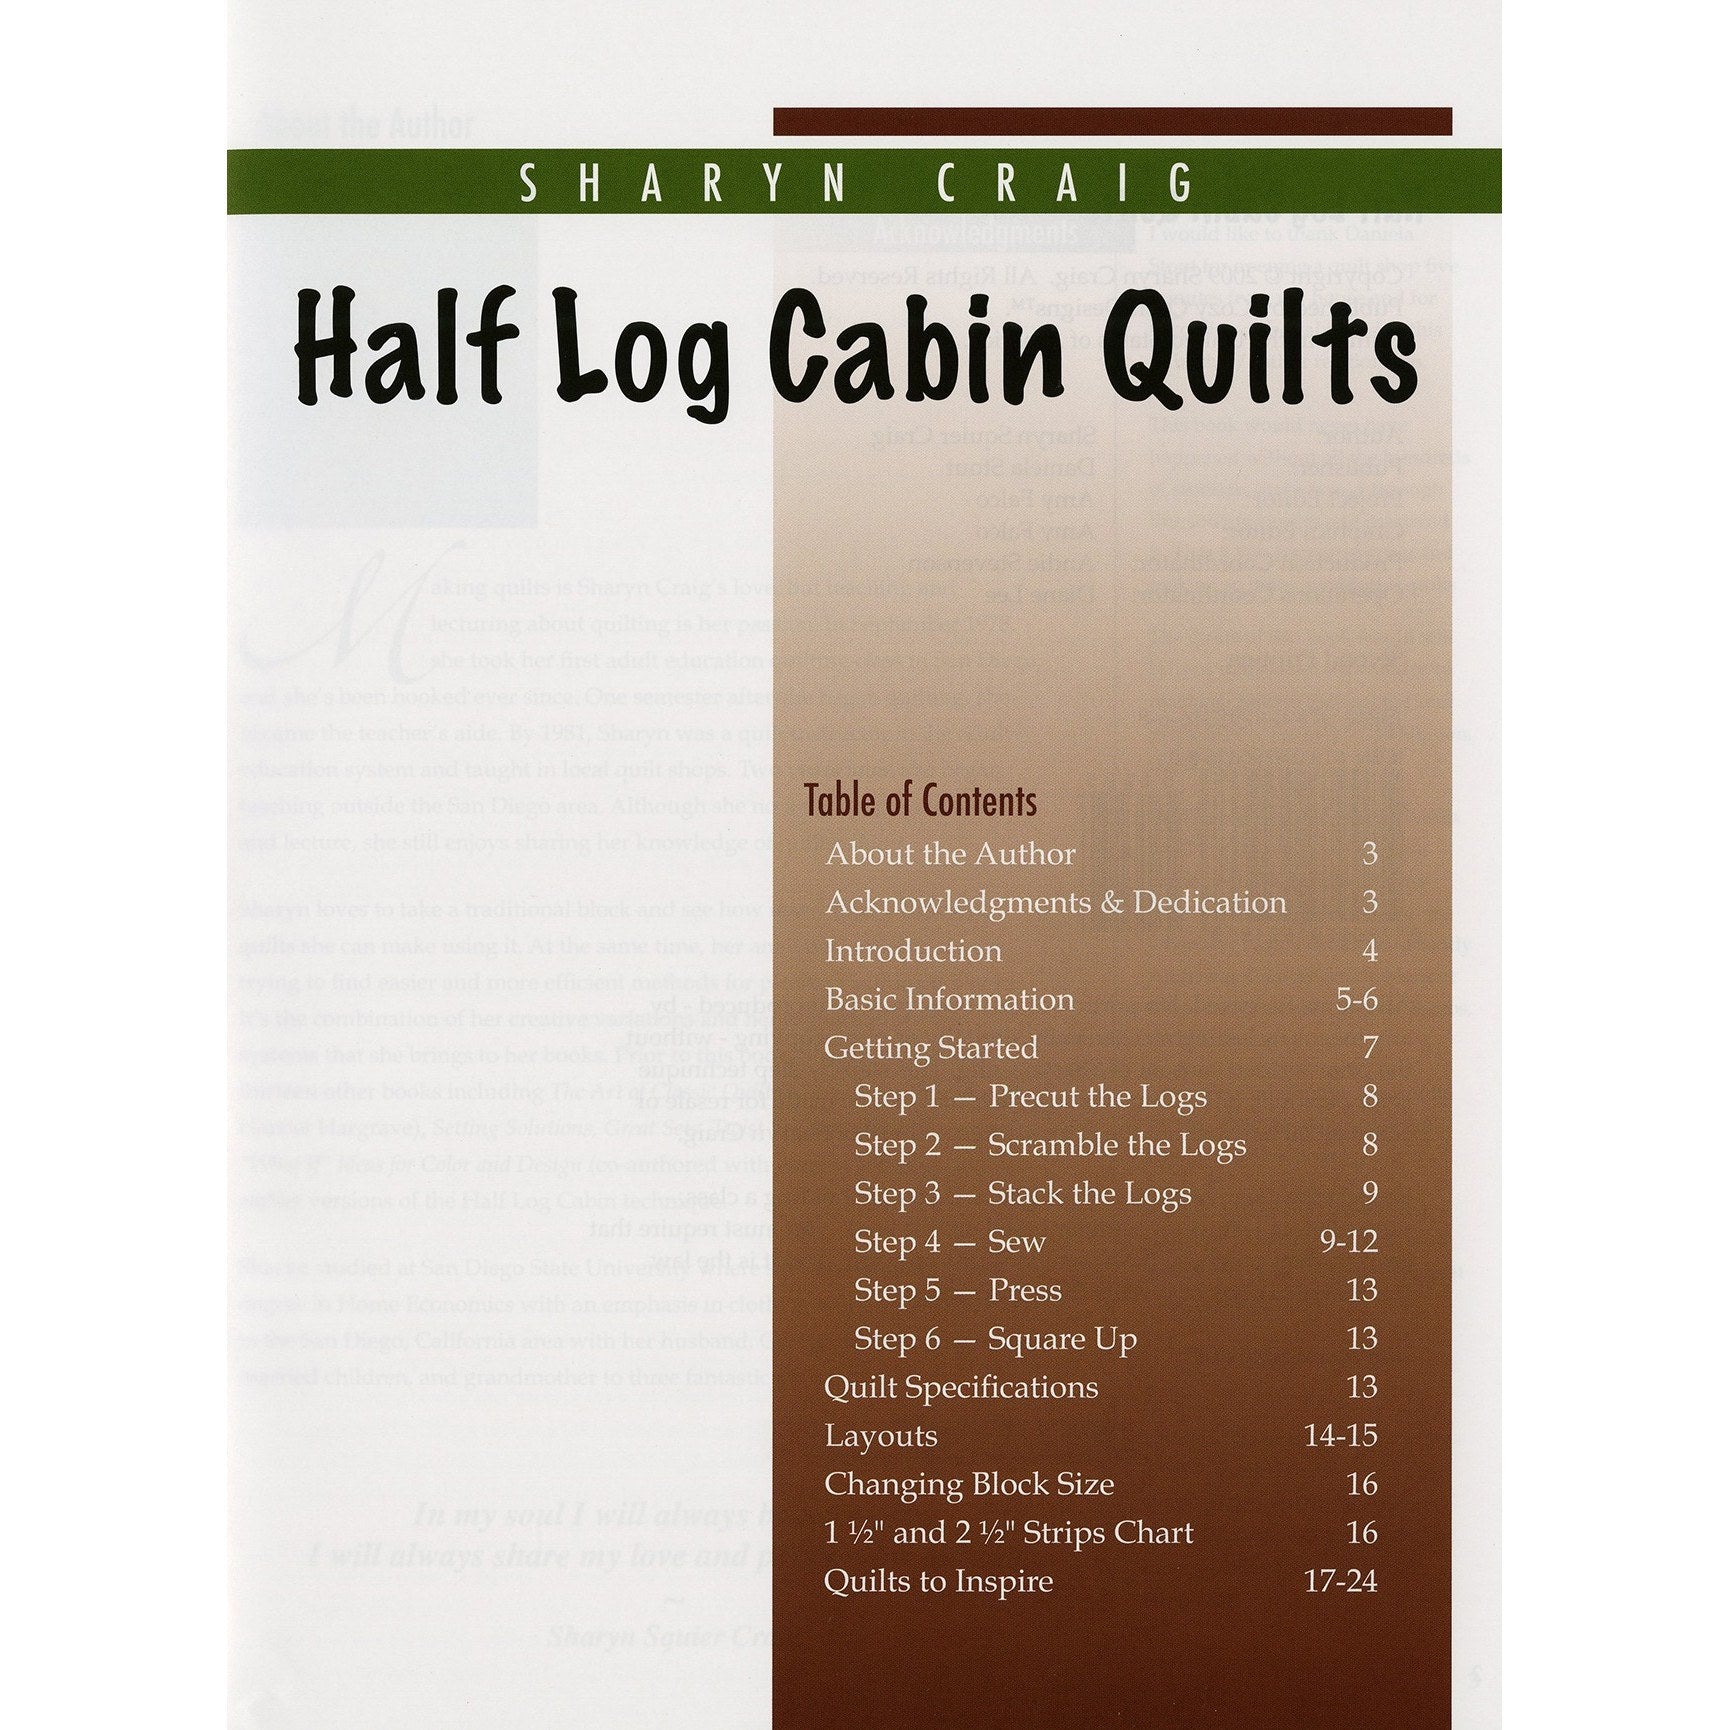 Half Log Cabin Quilts, Sharyn Craig image # 35452